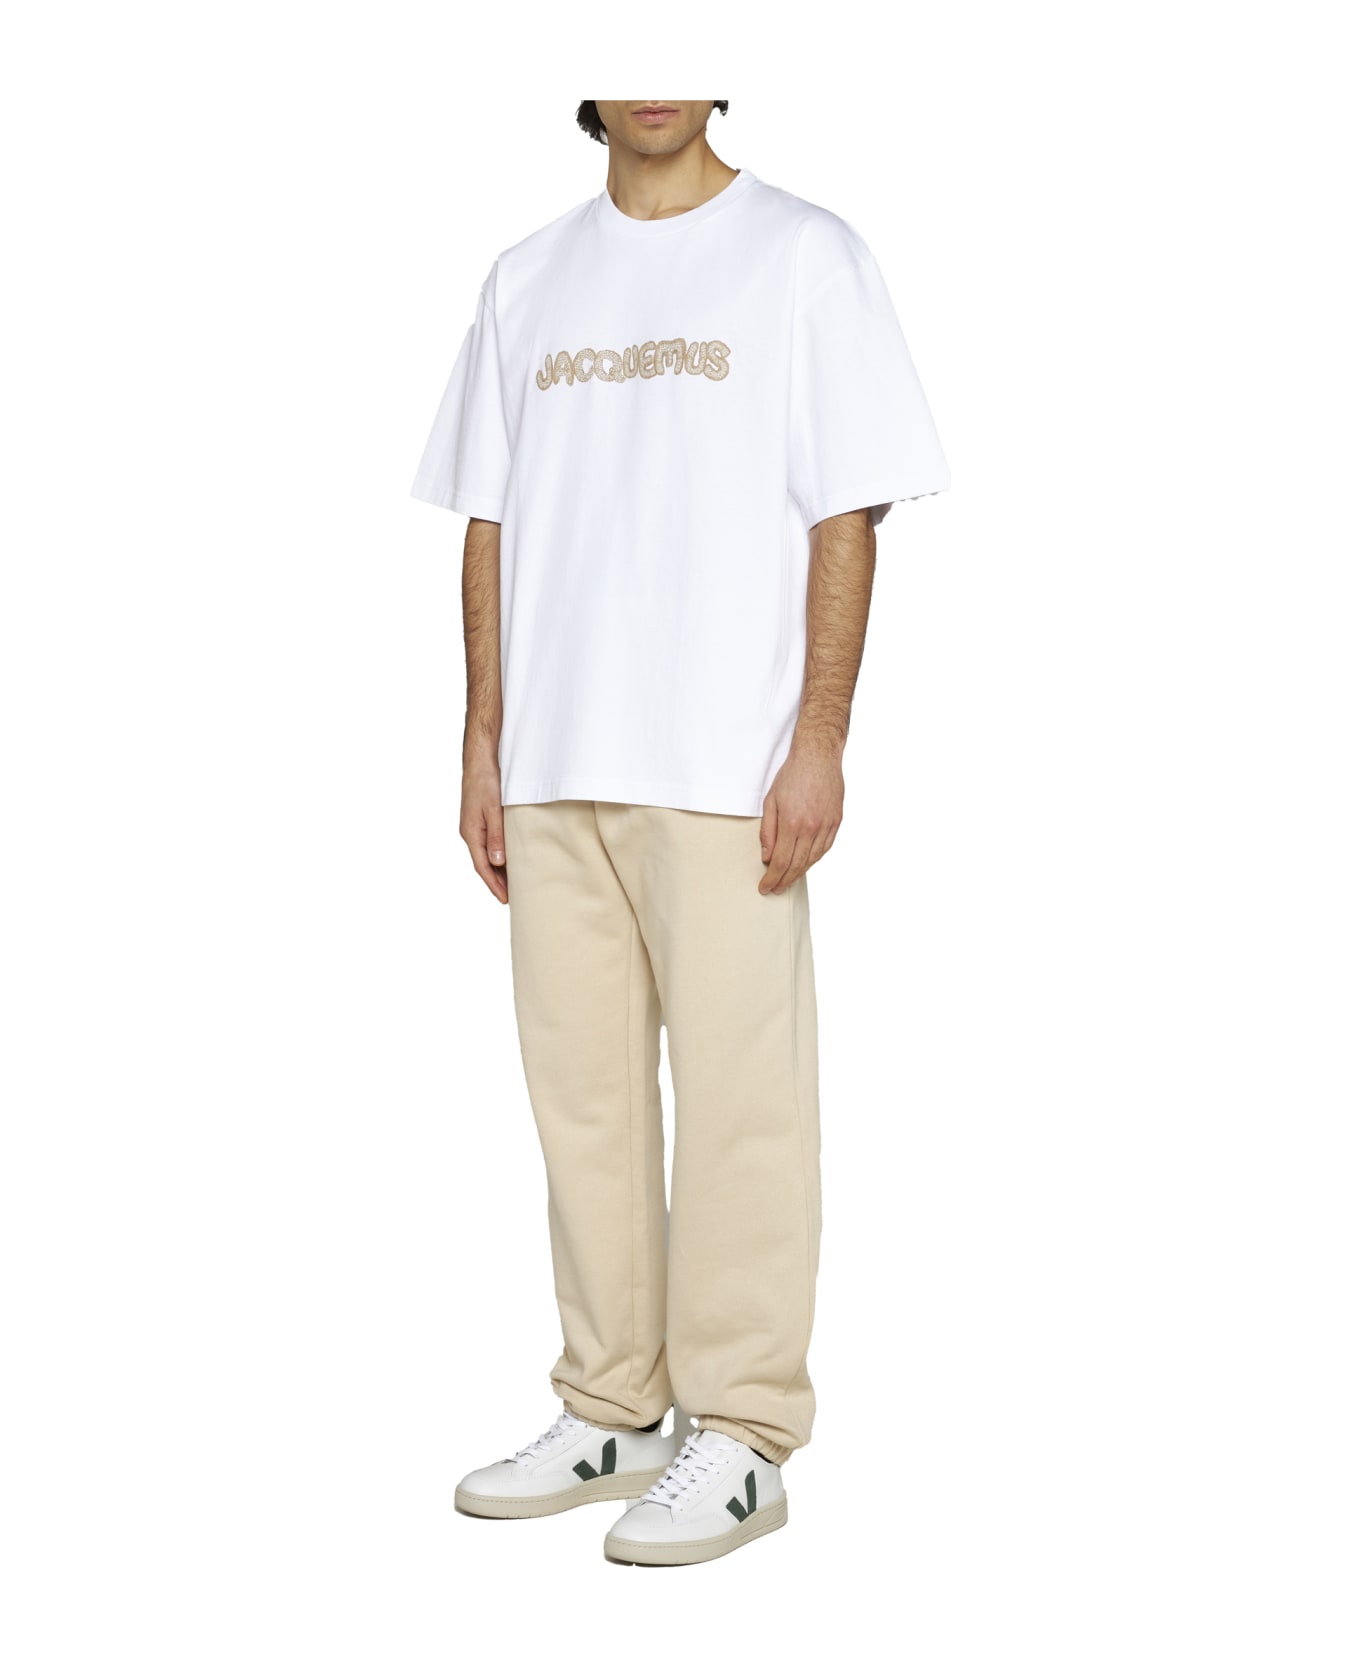 Jacquemus T-Shirt - Print macrame logo white